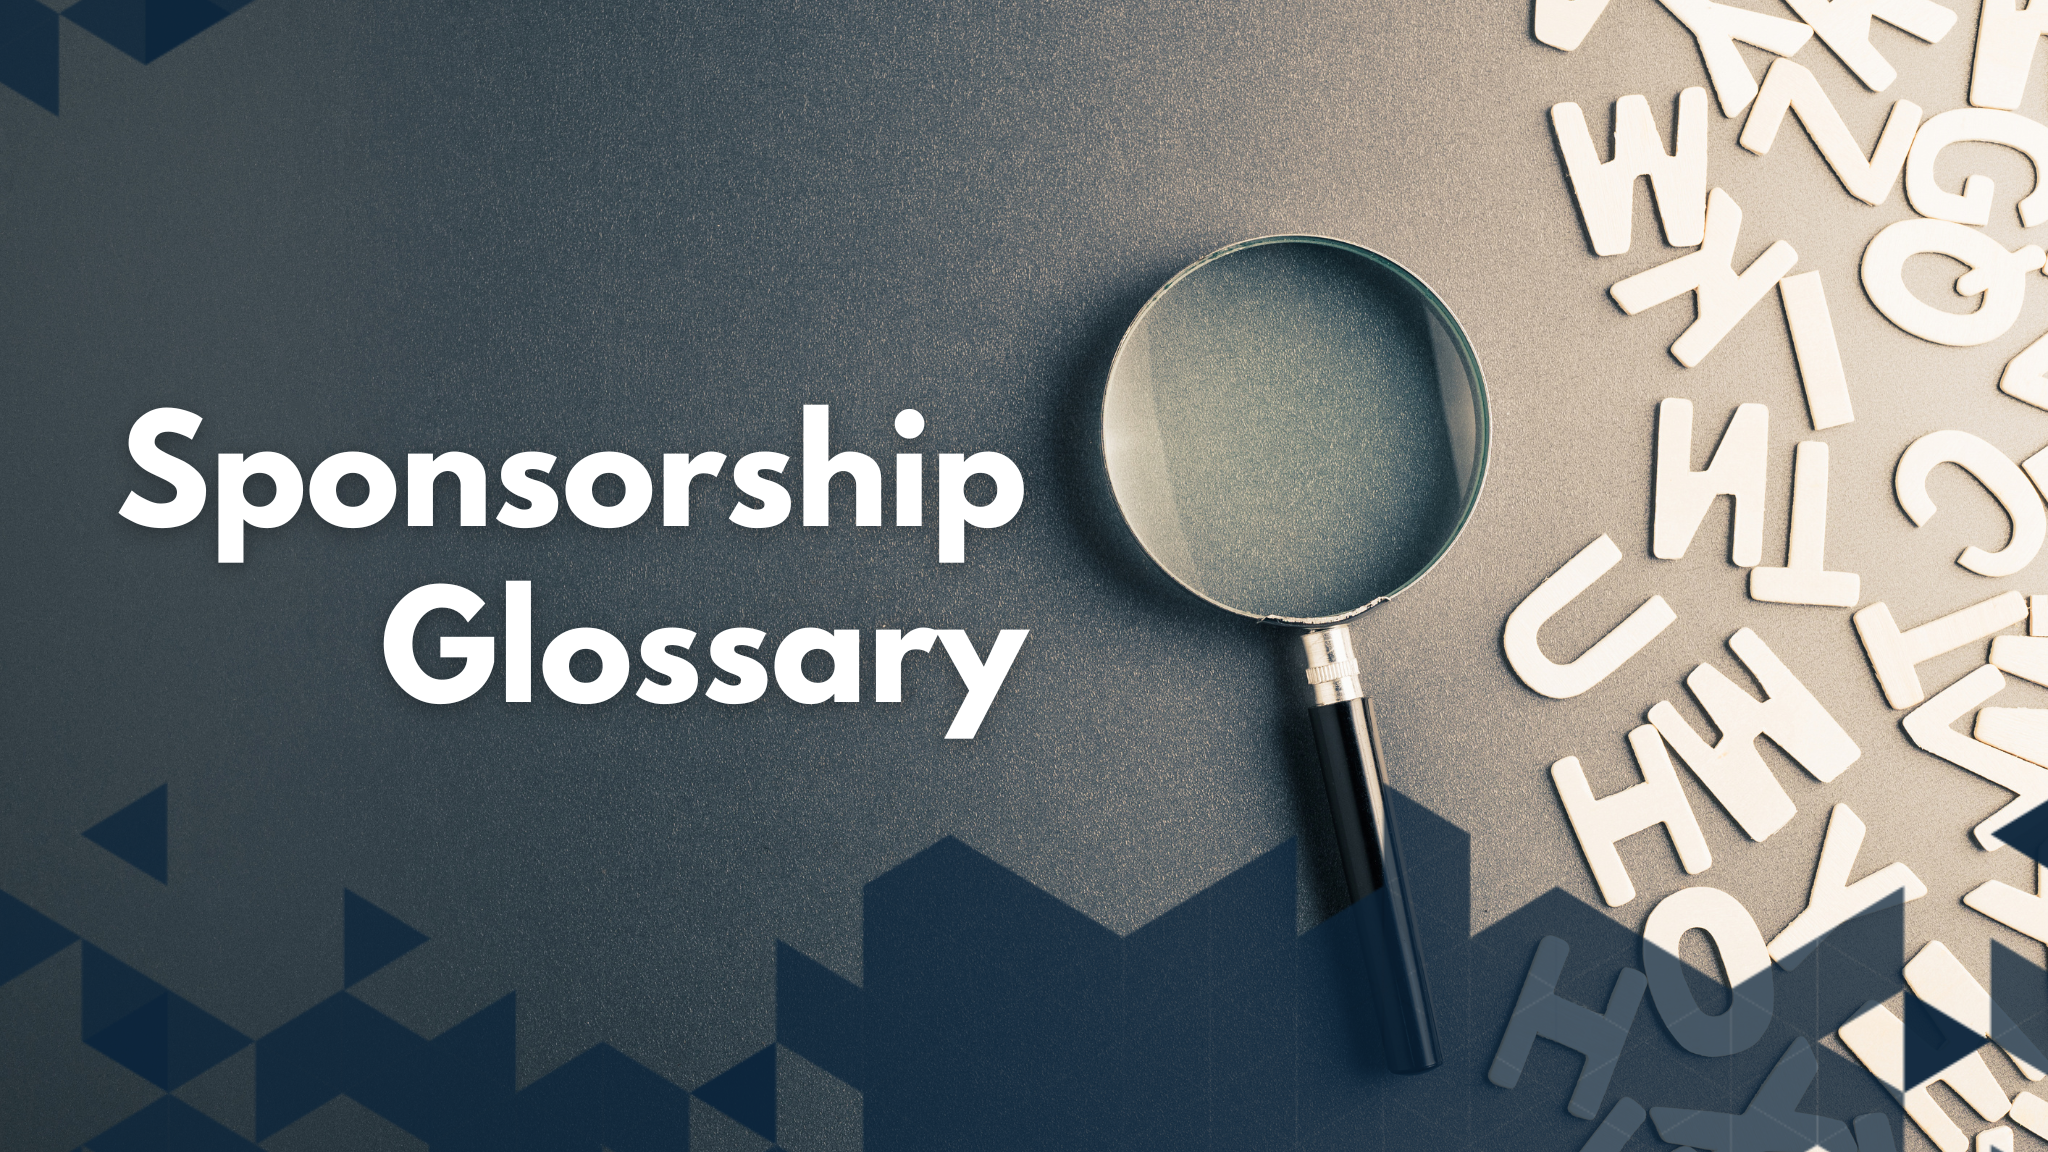 Sponsorship Glossary Terms